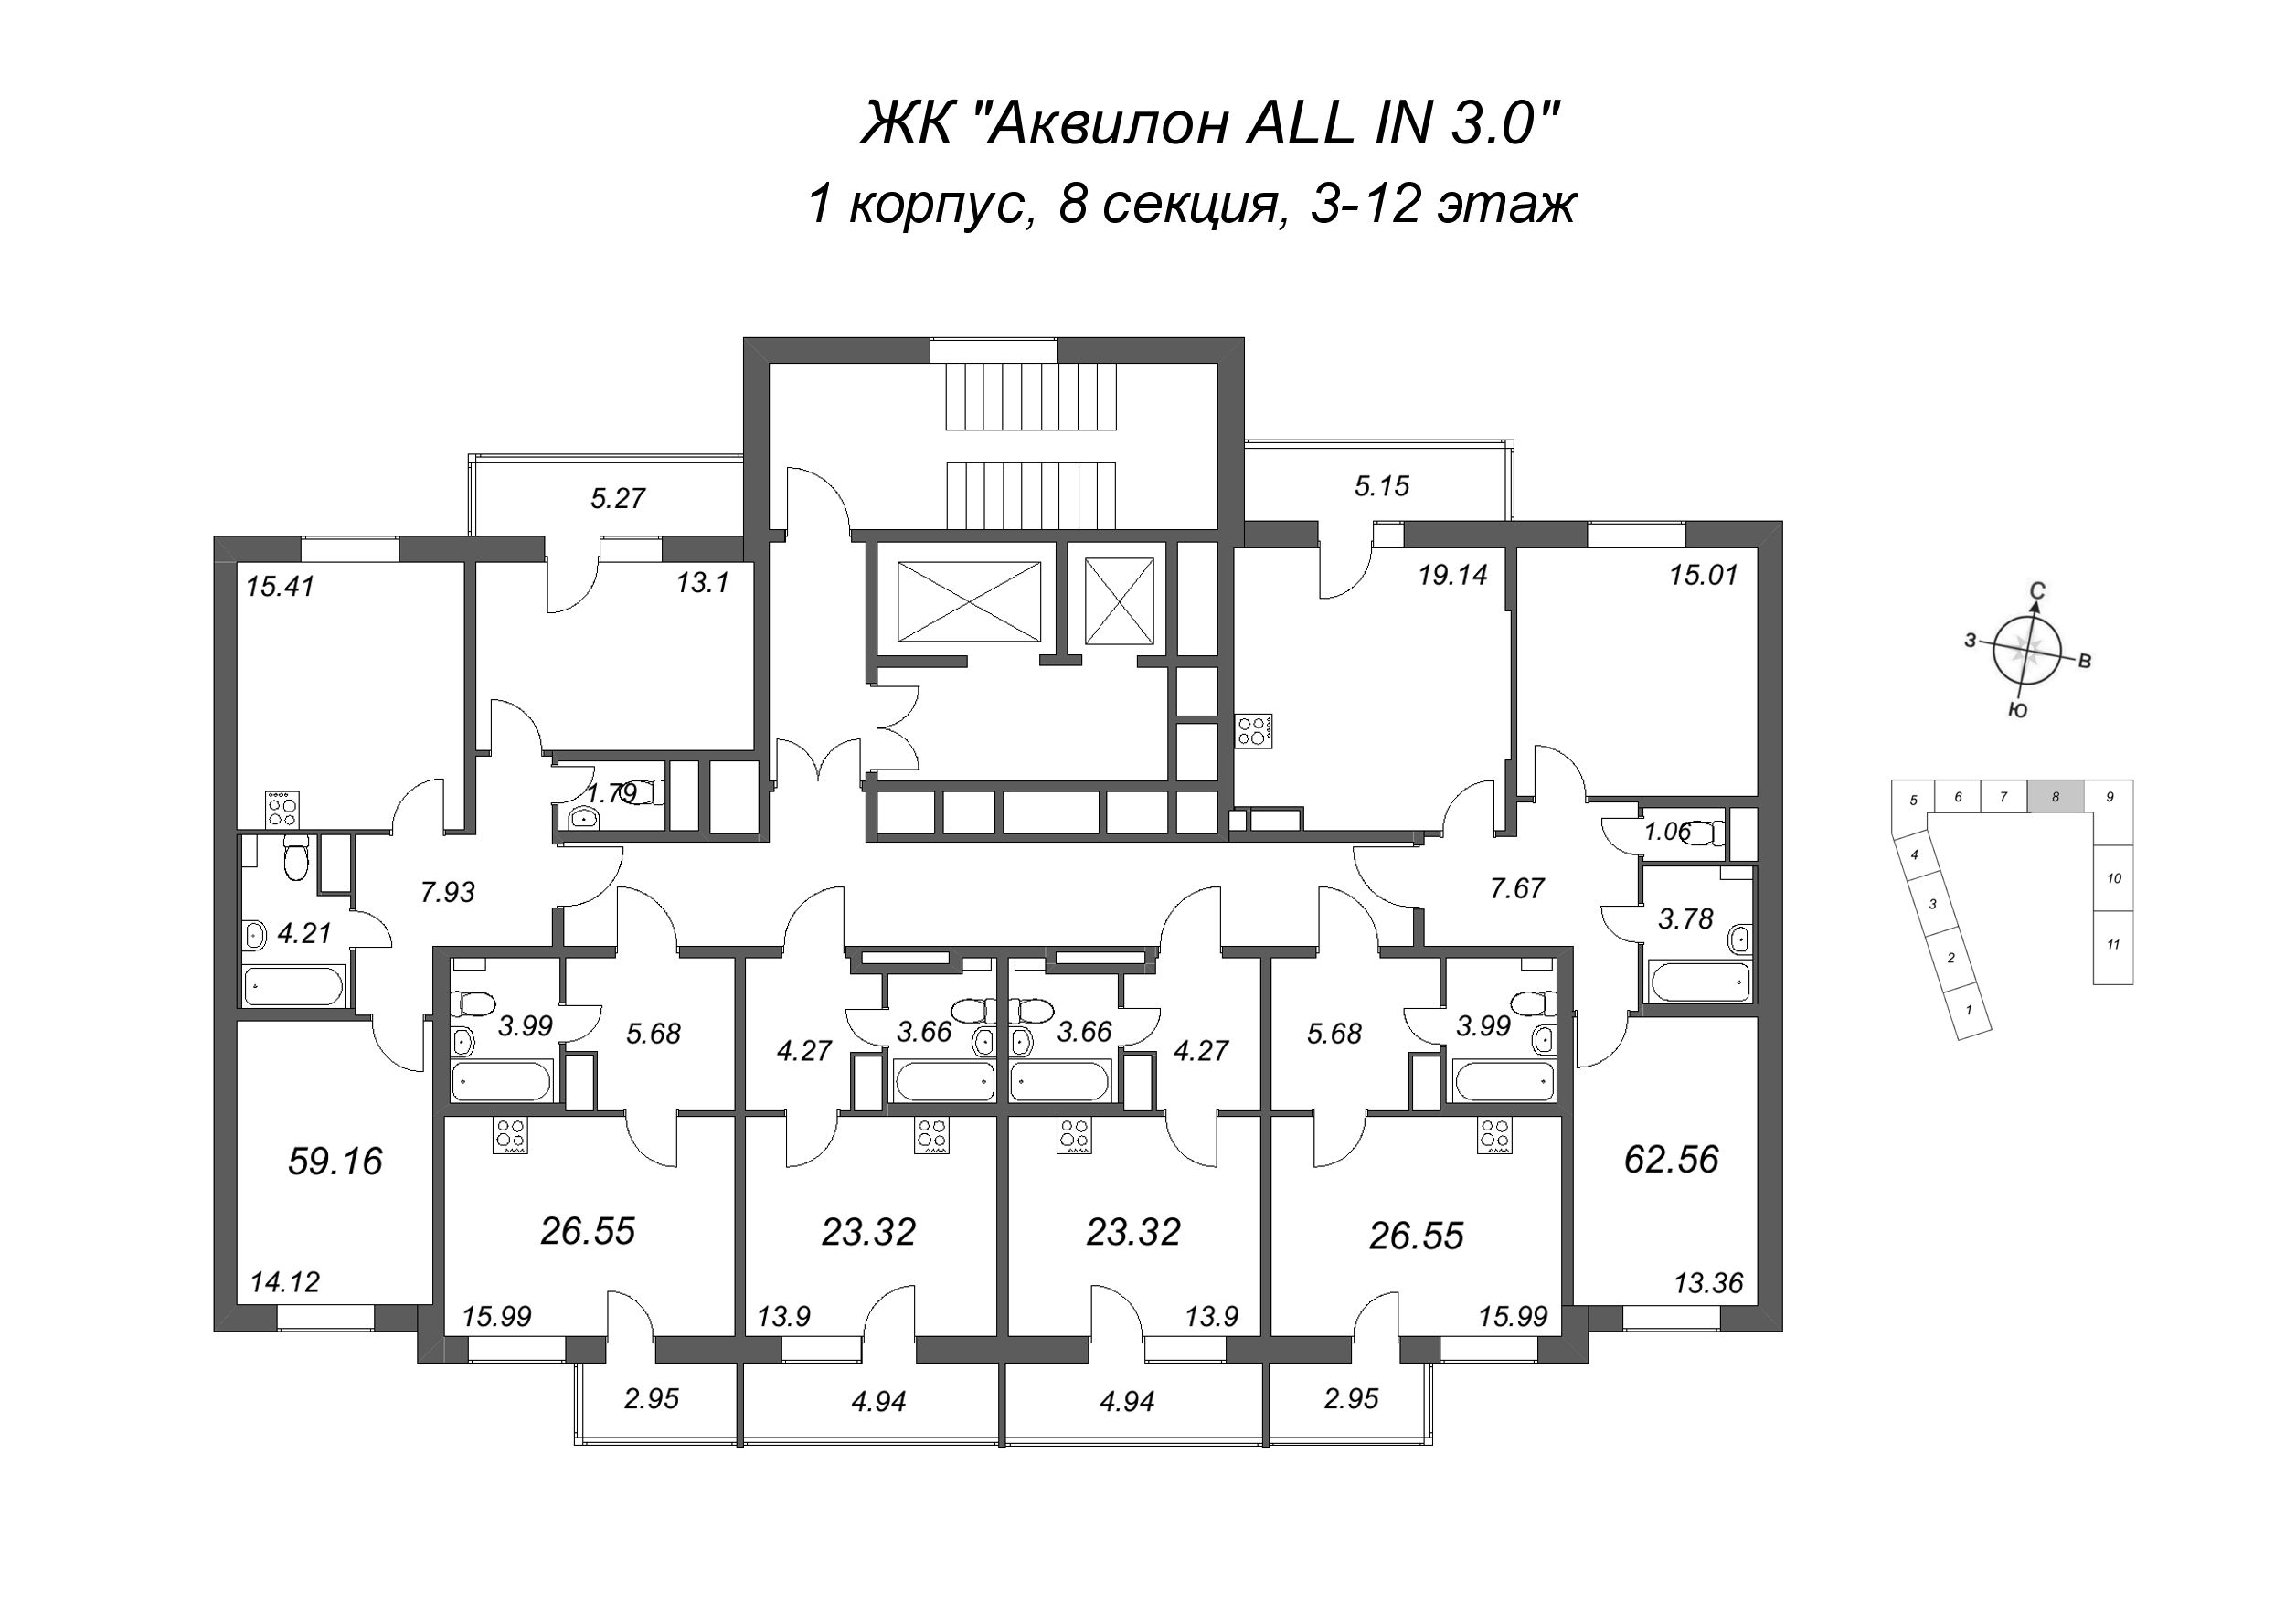 3-комнатная (Евро) квартира, 59.16 м² - планировка этажа